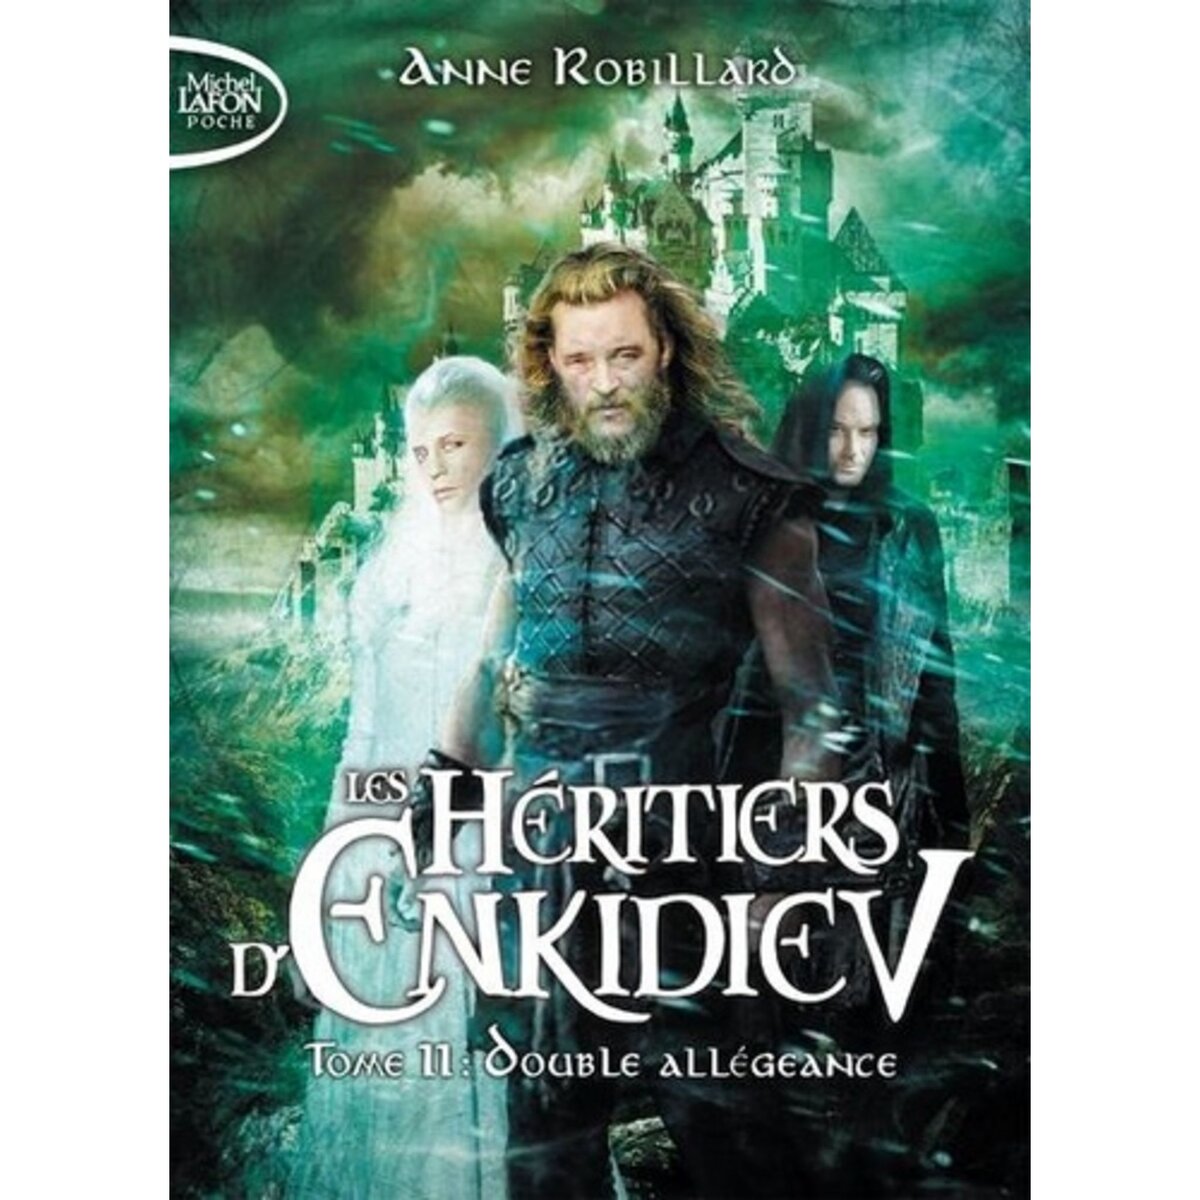  LES HERITIERS D'ENKIDIEV TOME 11 : DOUBLE ALLEGEANCE, Robillard Anne